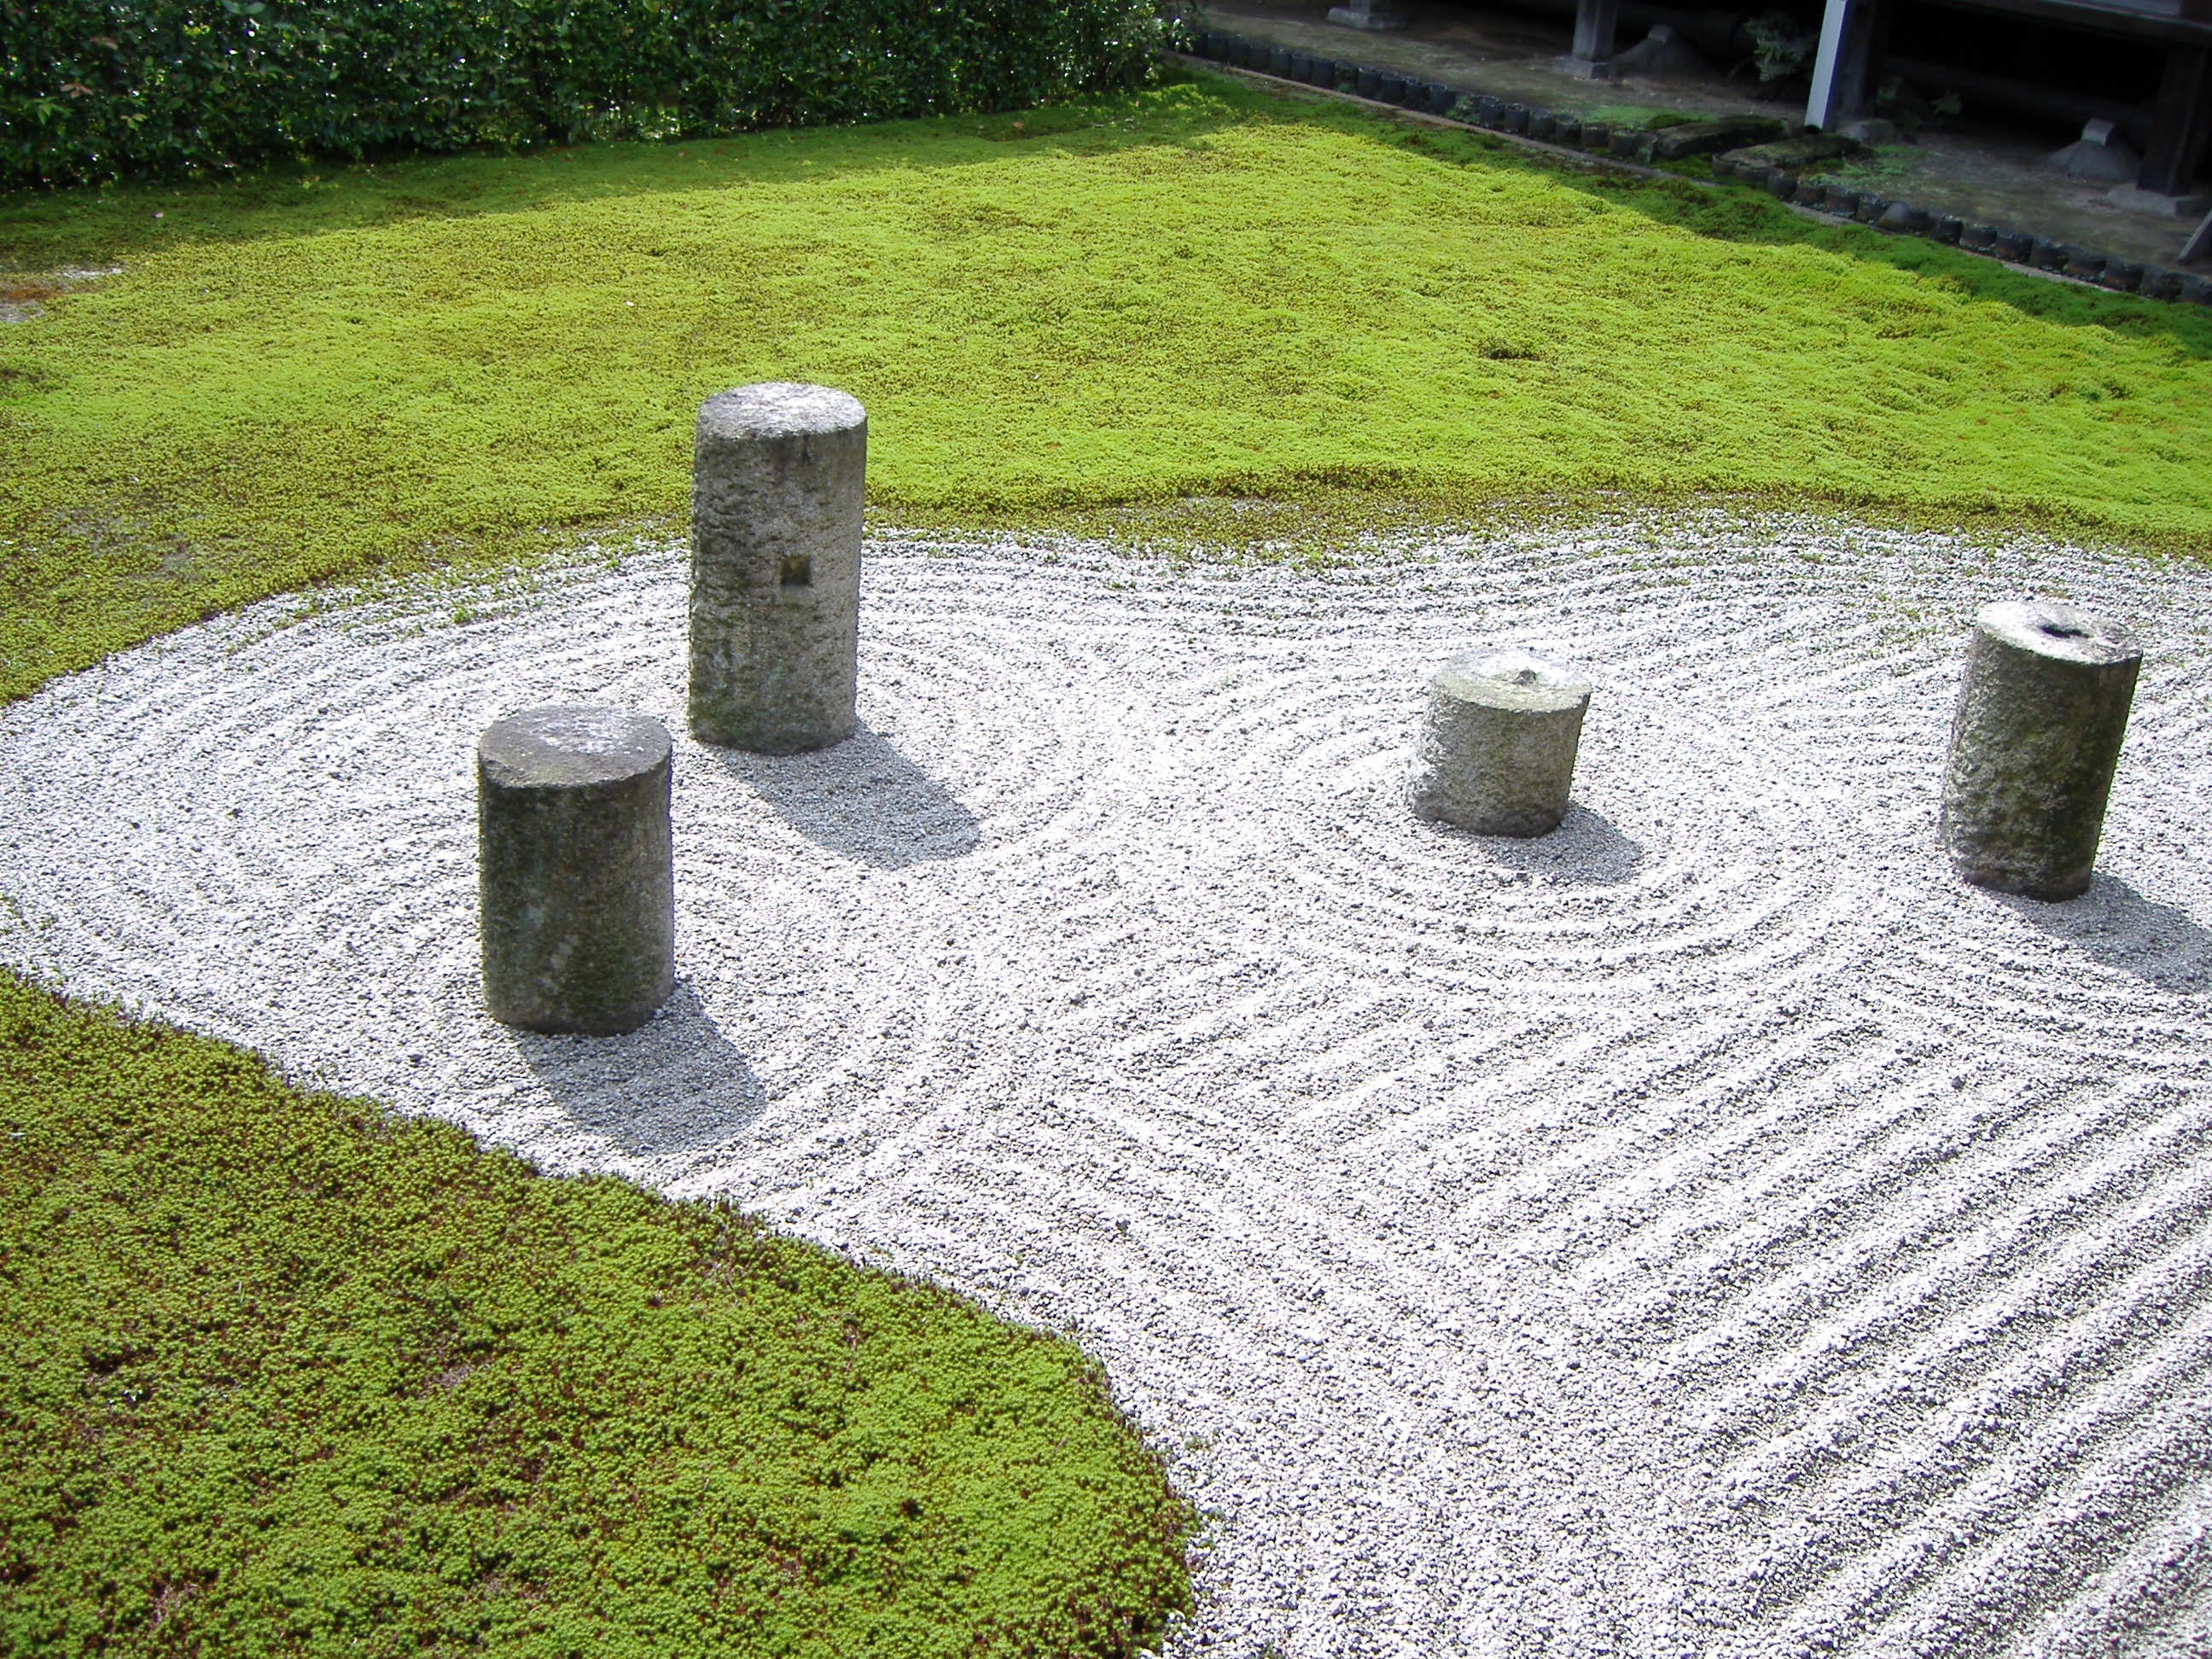 Zen garden with white sand and stone scupltures